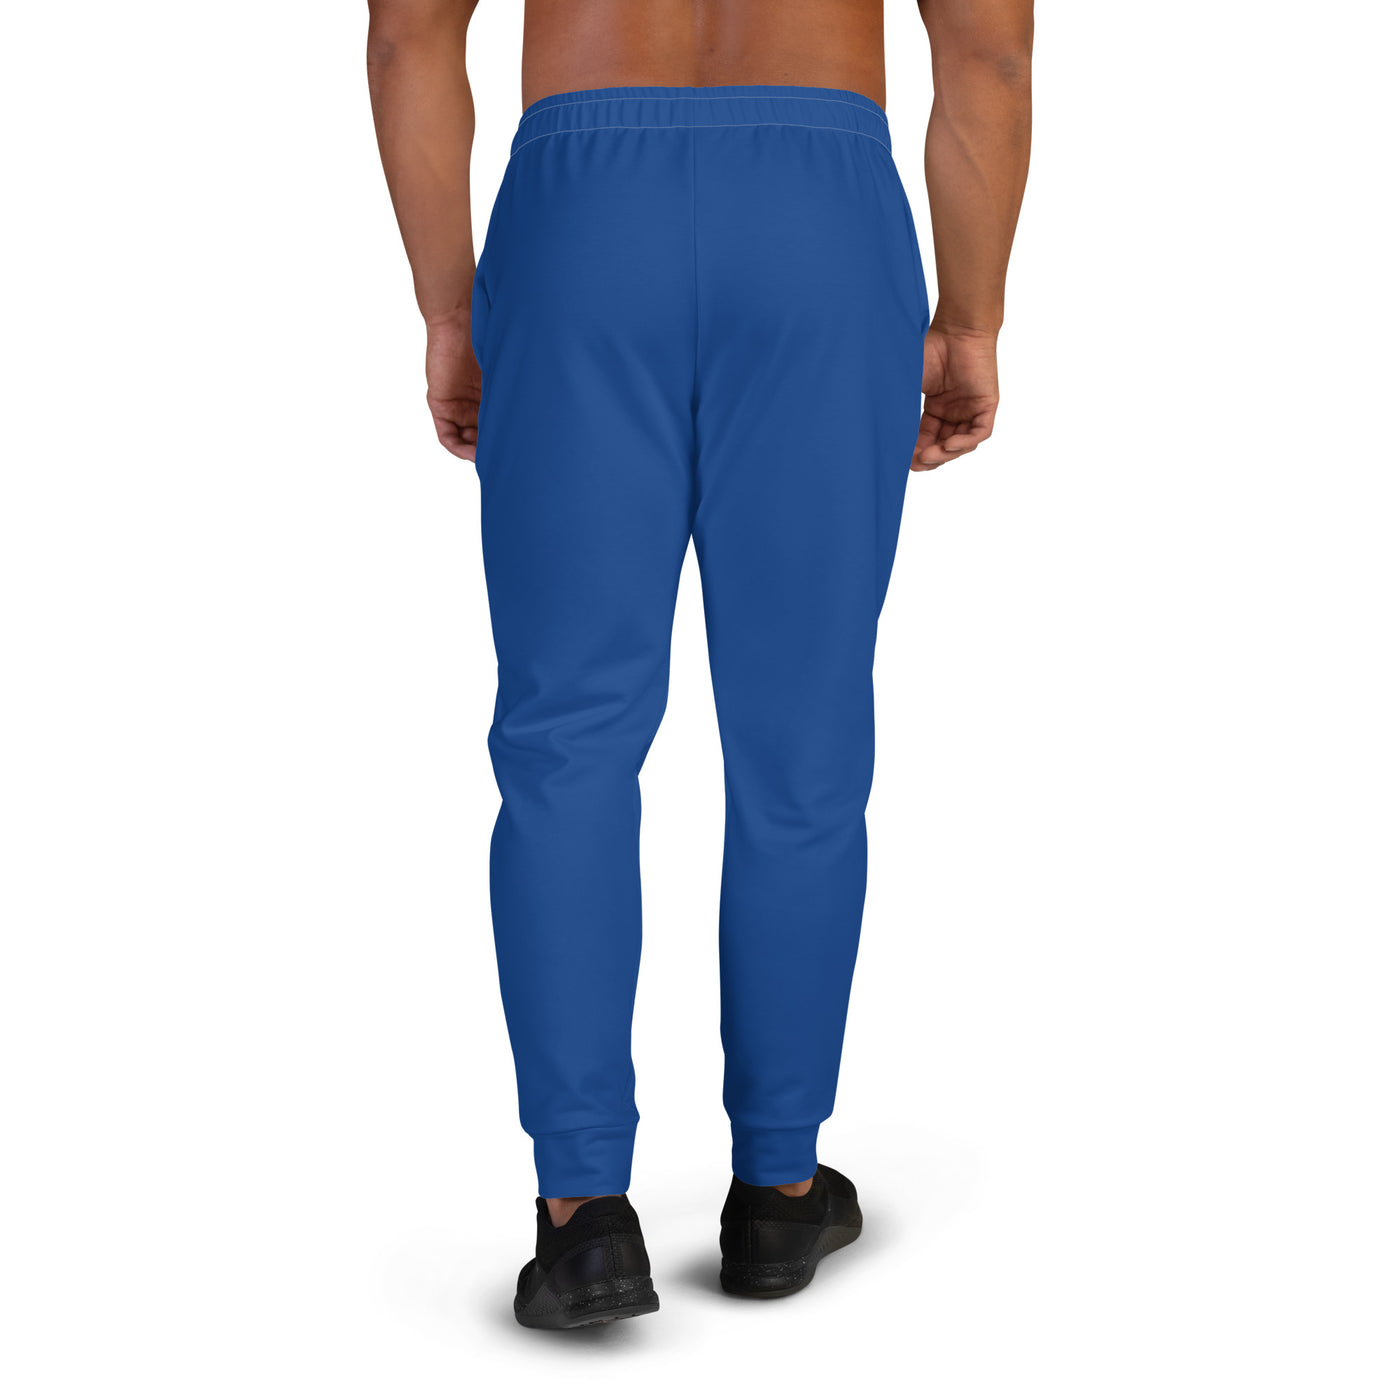 Gendo Milano Blue Jogging Pants